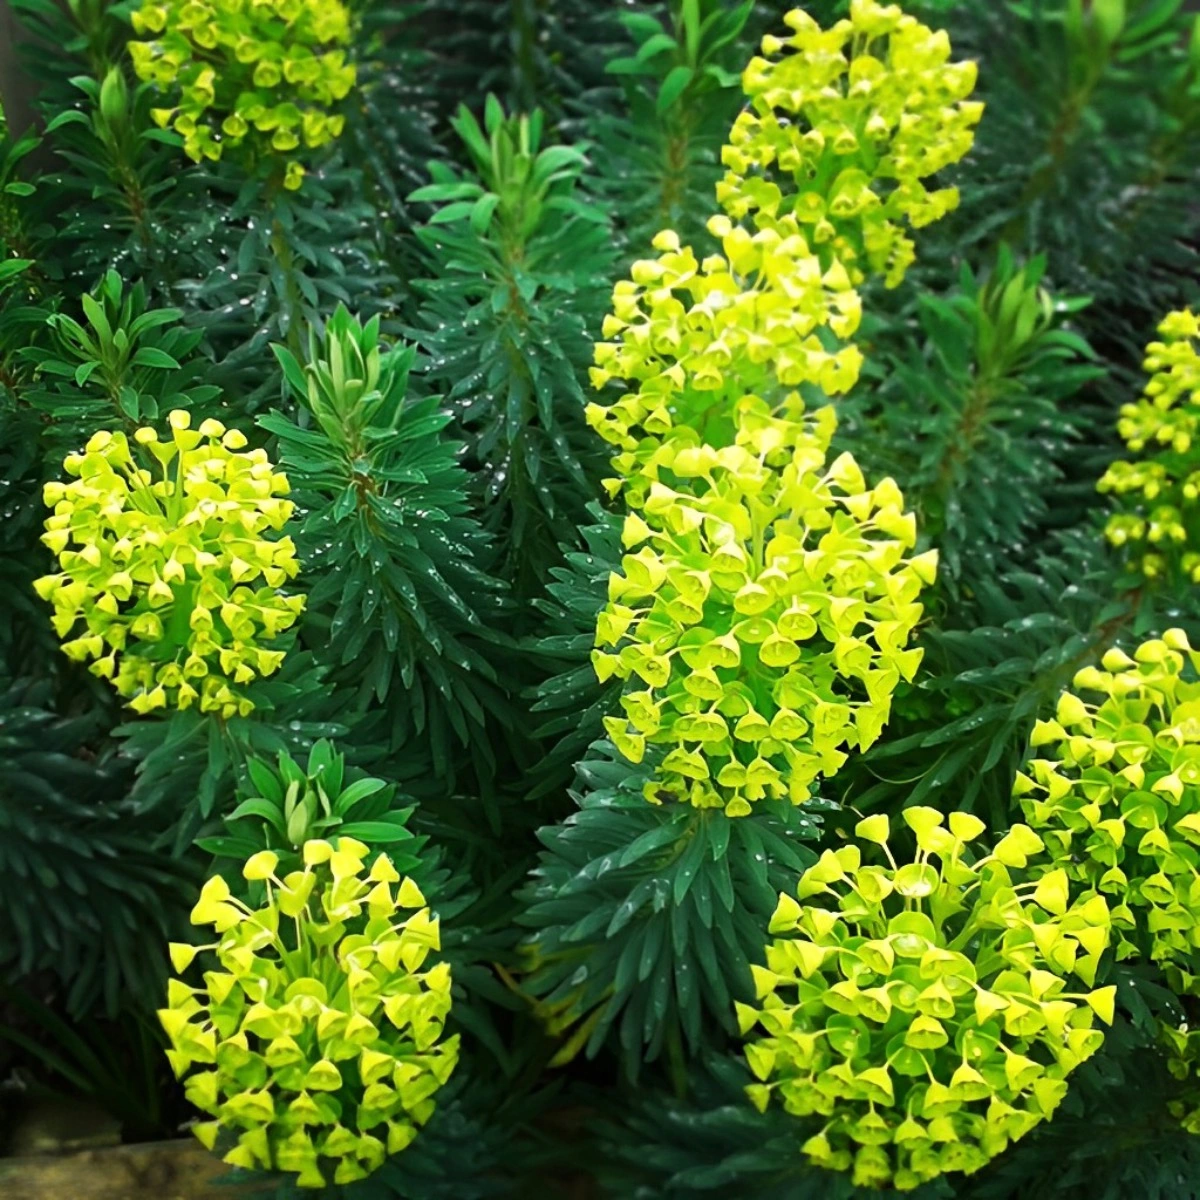 petit arbuste euphorbe fleuri dans les tons verts jaune